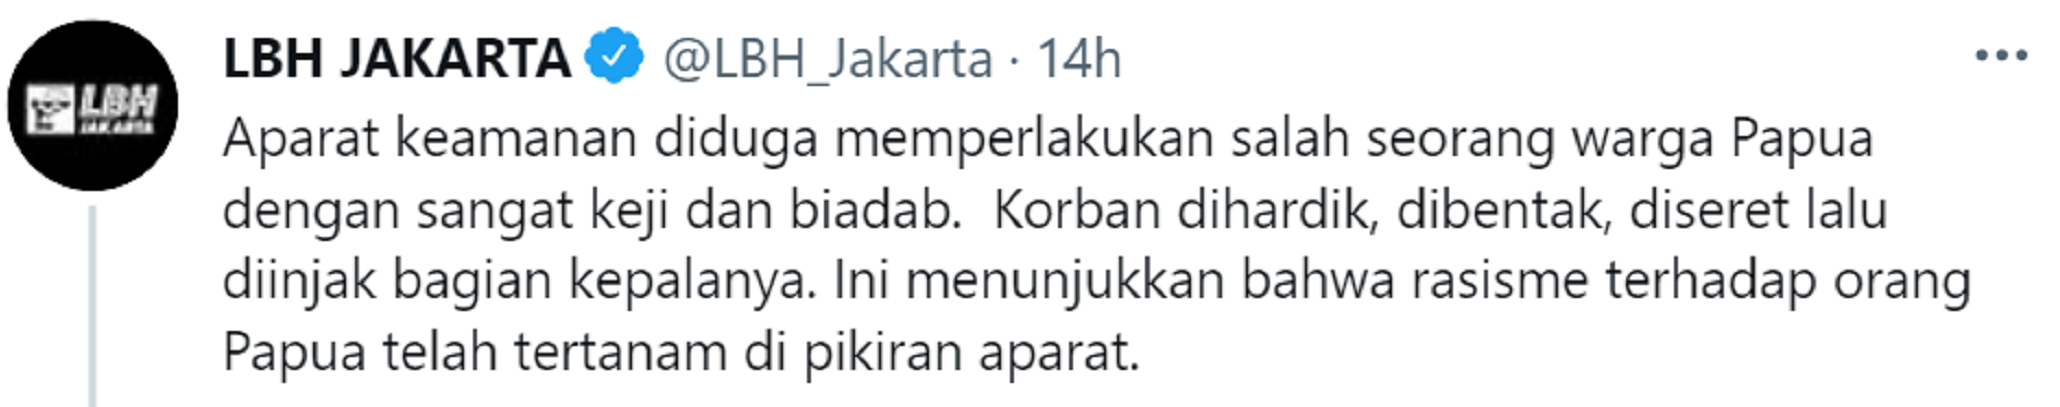 Cuitan akun resmi LBH Jakarta.